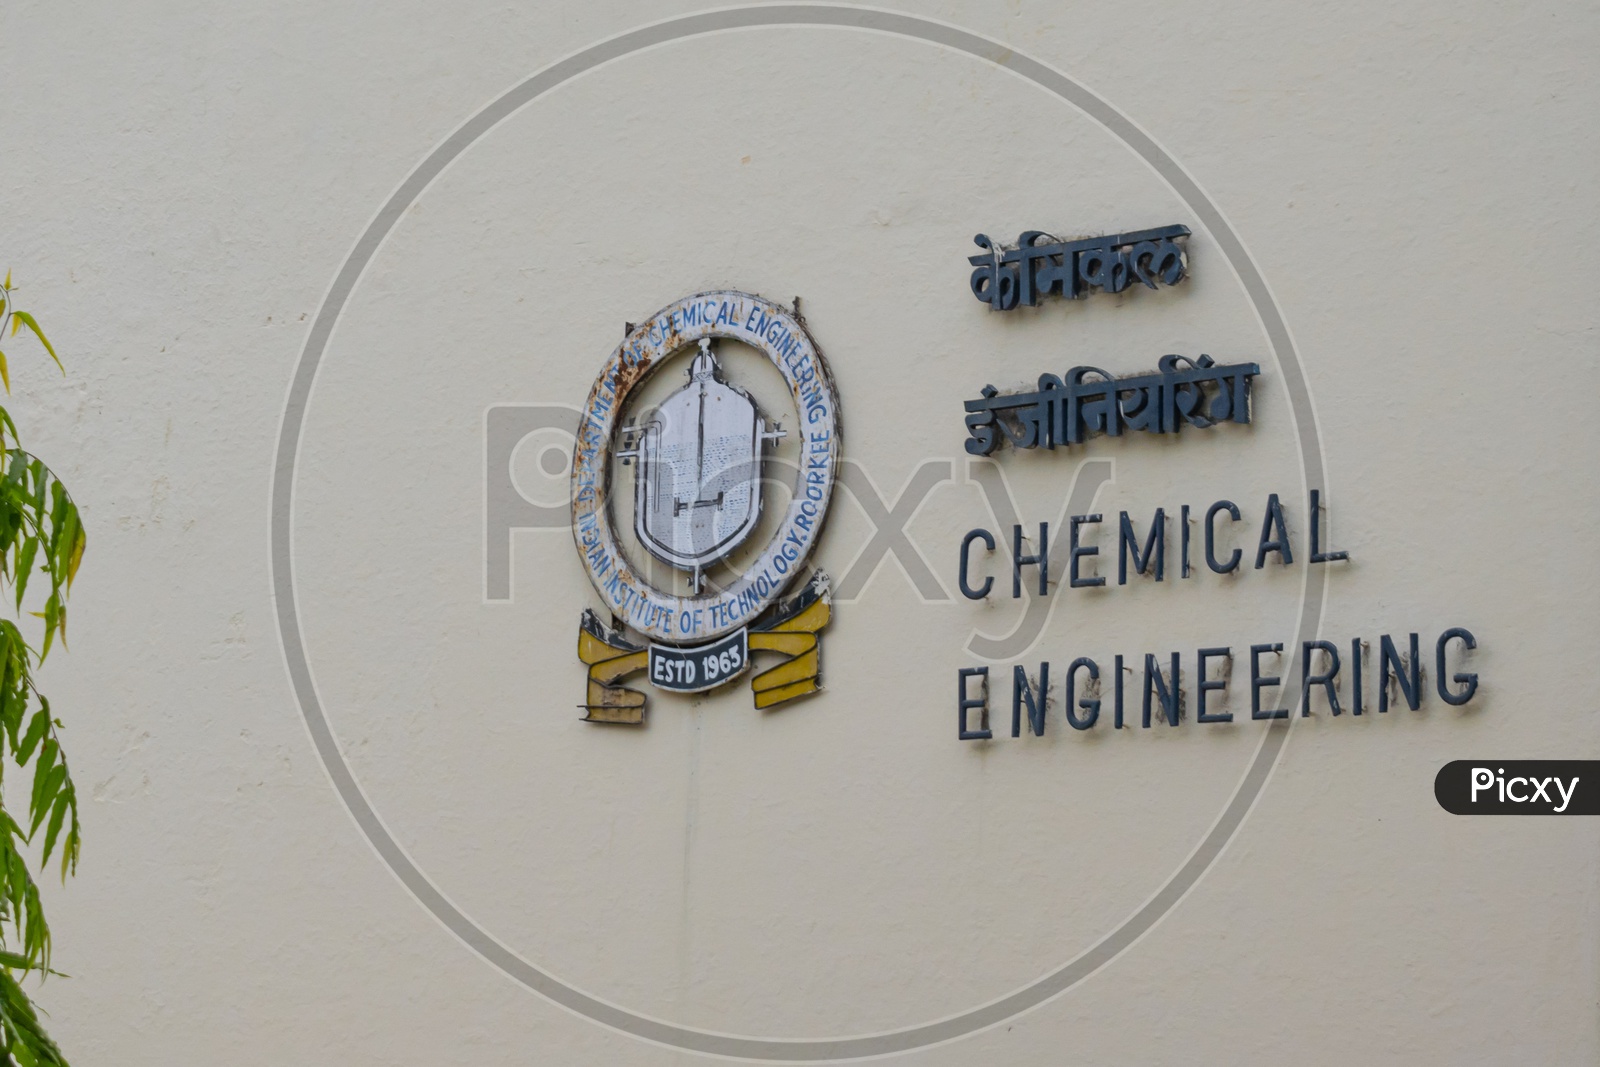 Dept. of Chemical Engineering, Indian Institute of Technology Roorkee (IIT Roorkee)